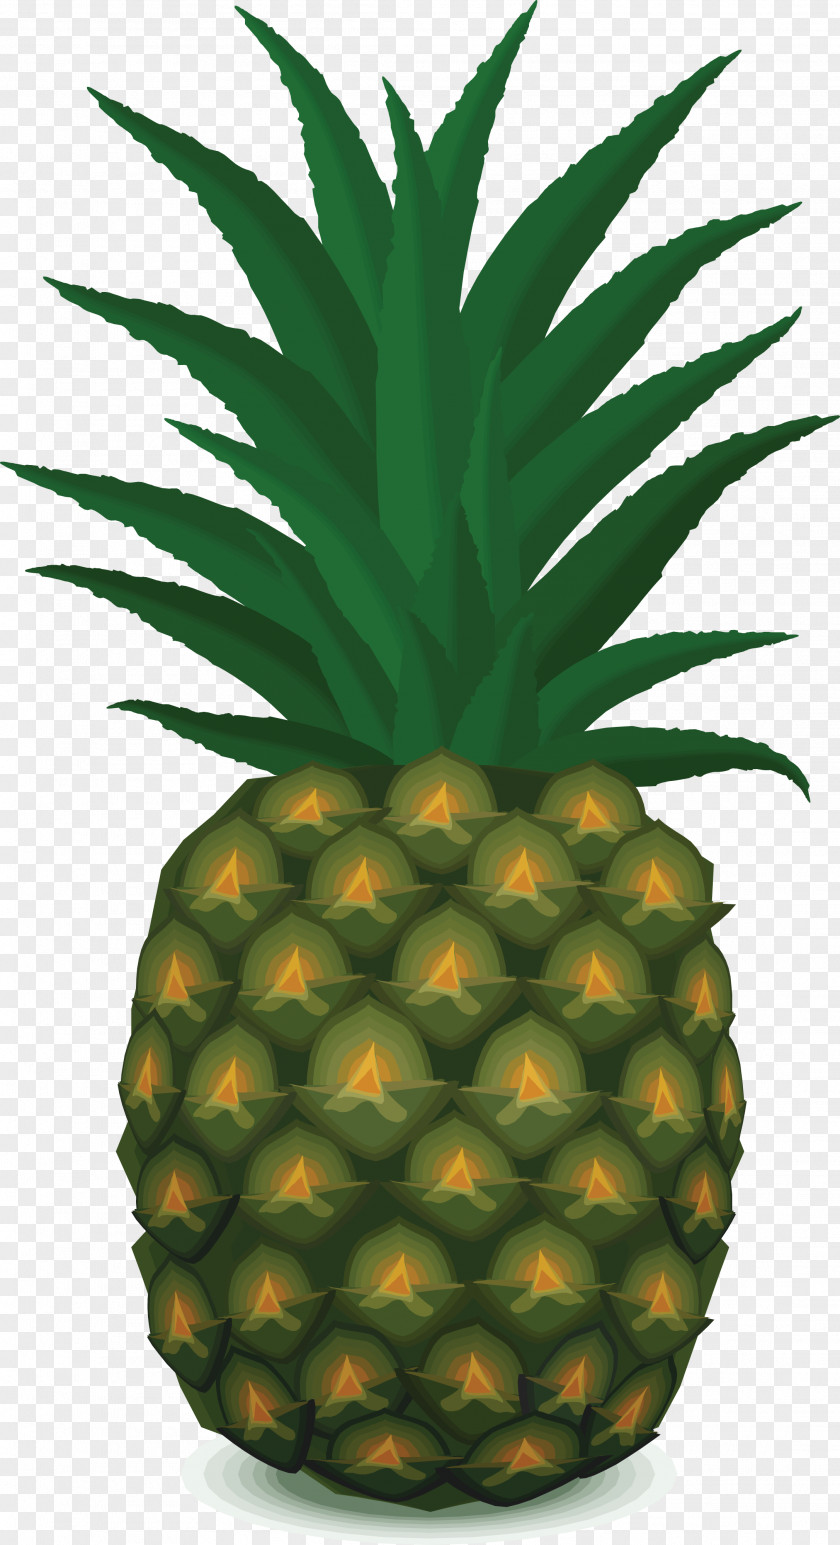 Pineapple Image, Free Download Fruit Salad Clip Art PNG